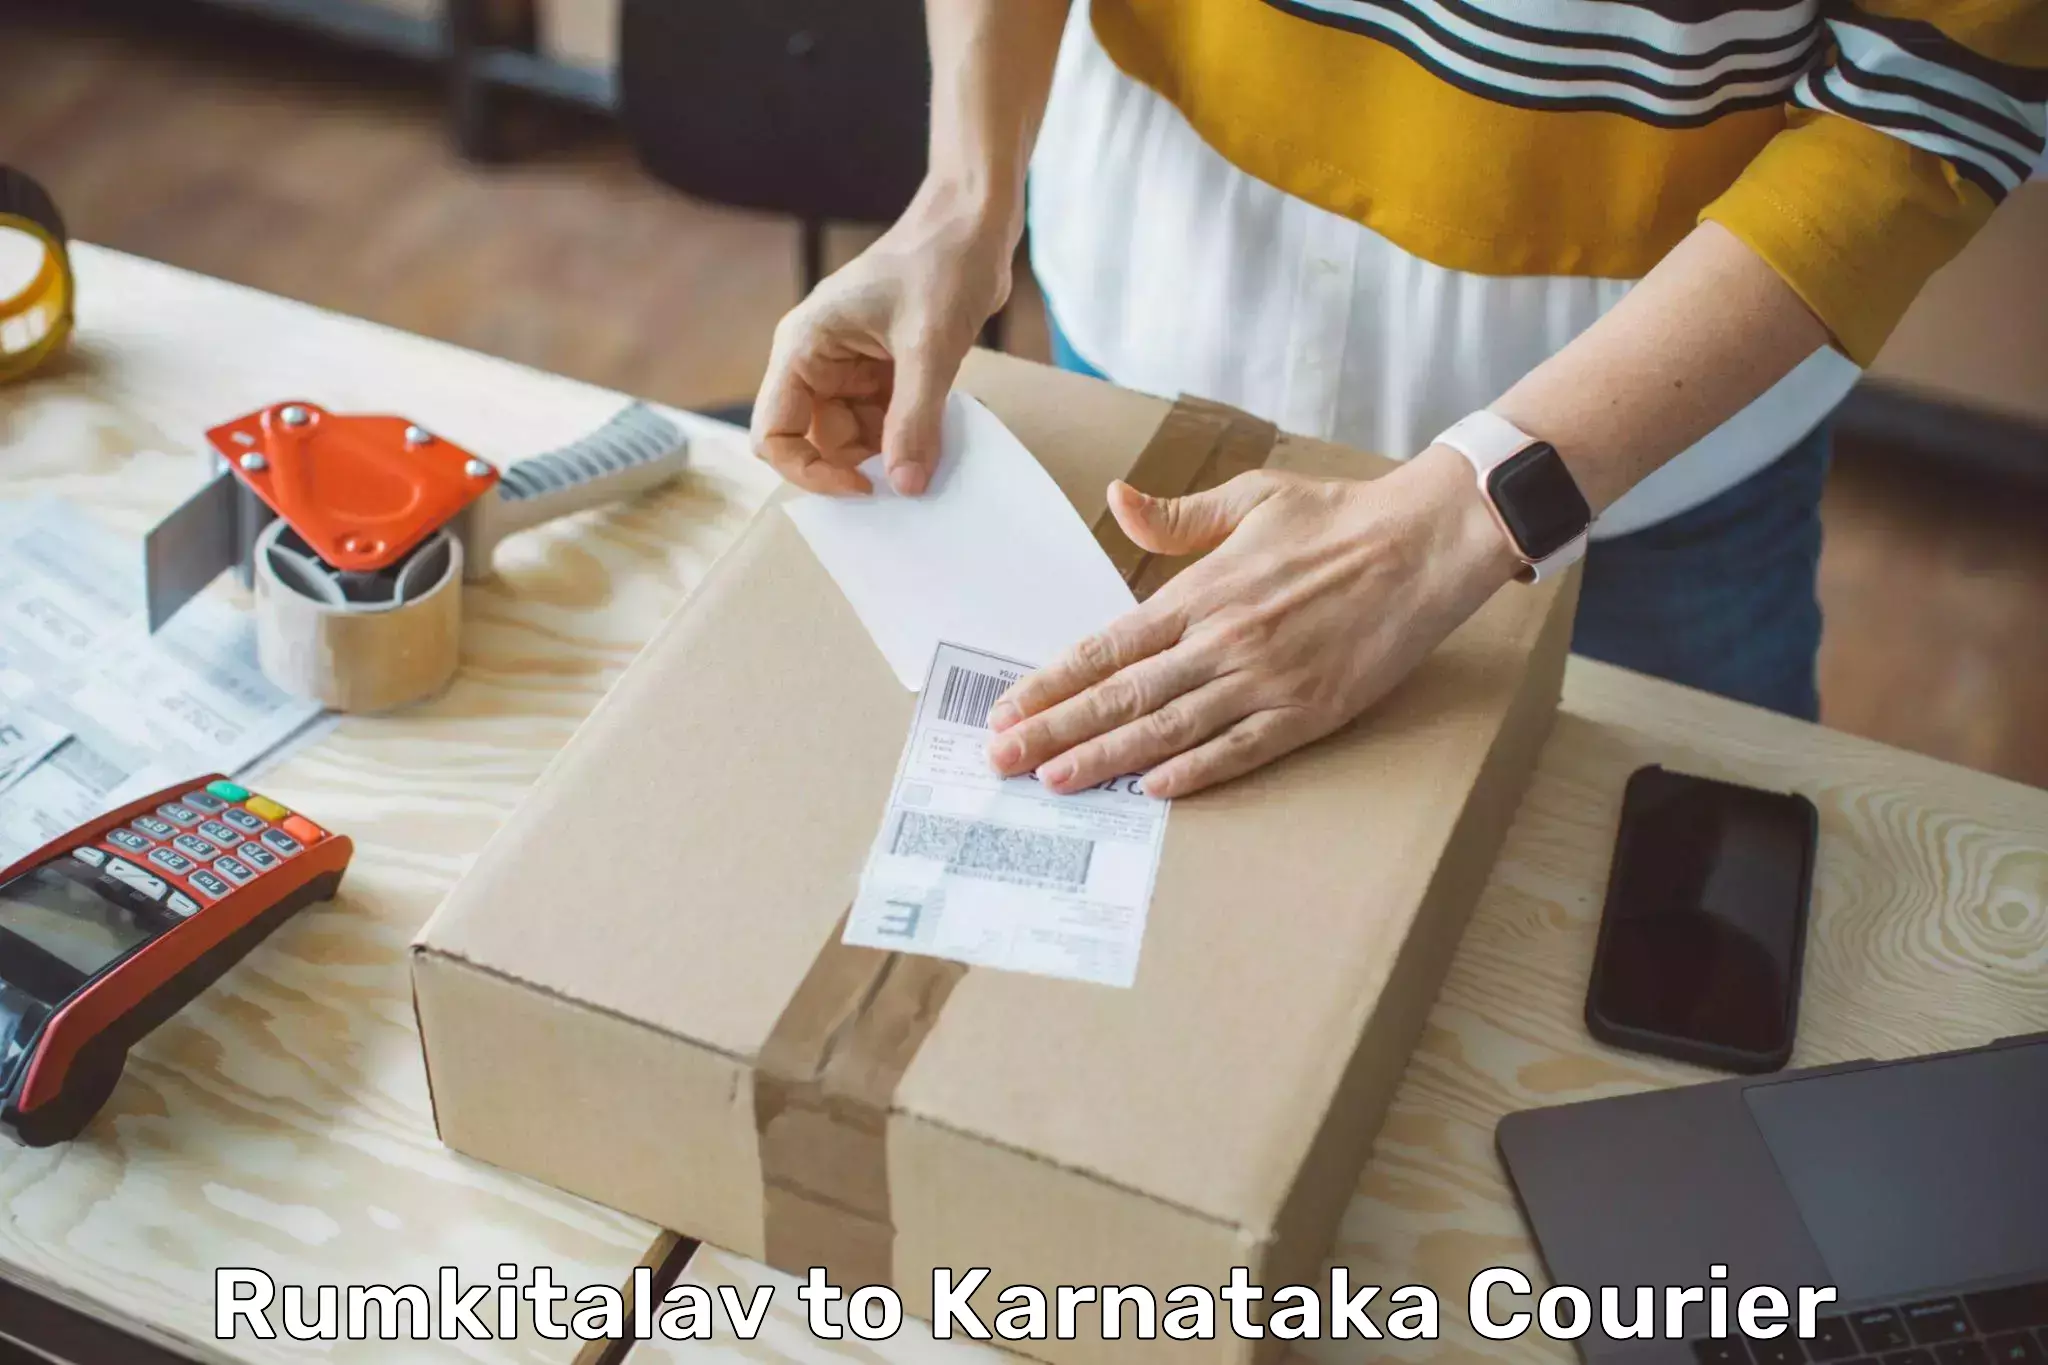 Bulk shipment Rumkitalav to Karnataka